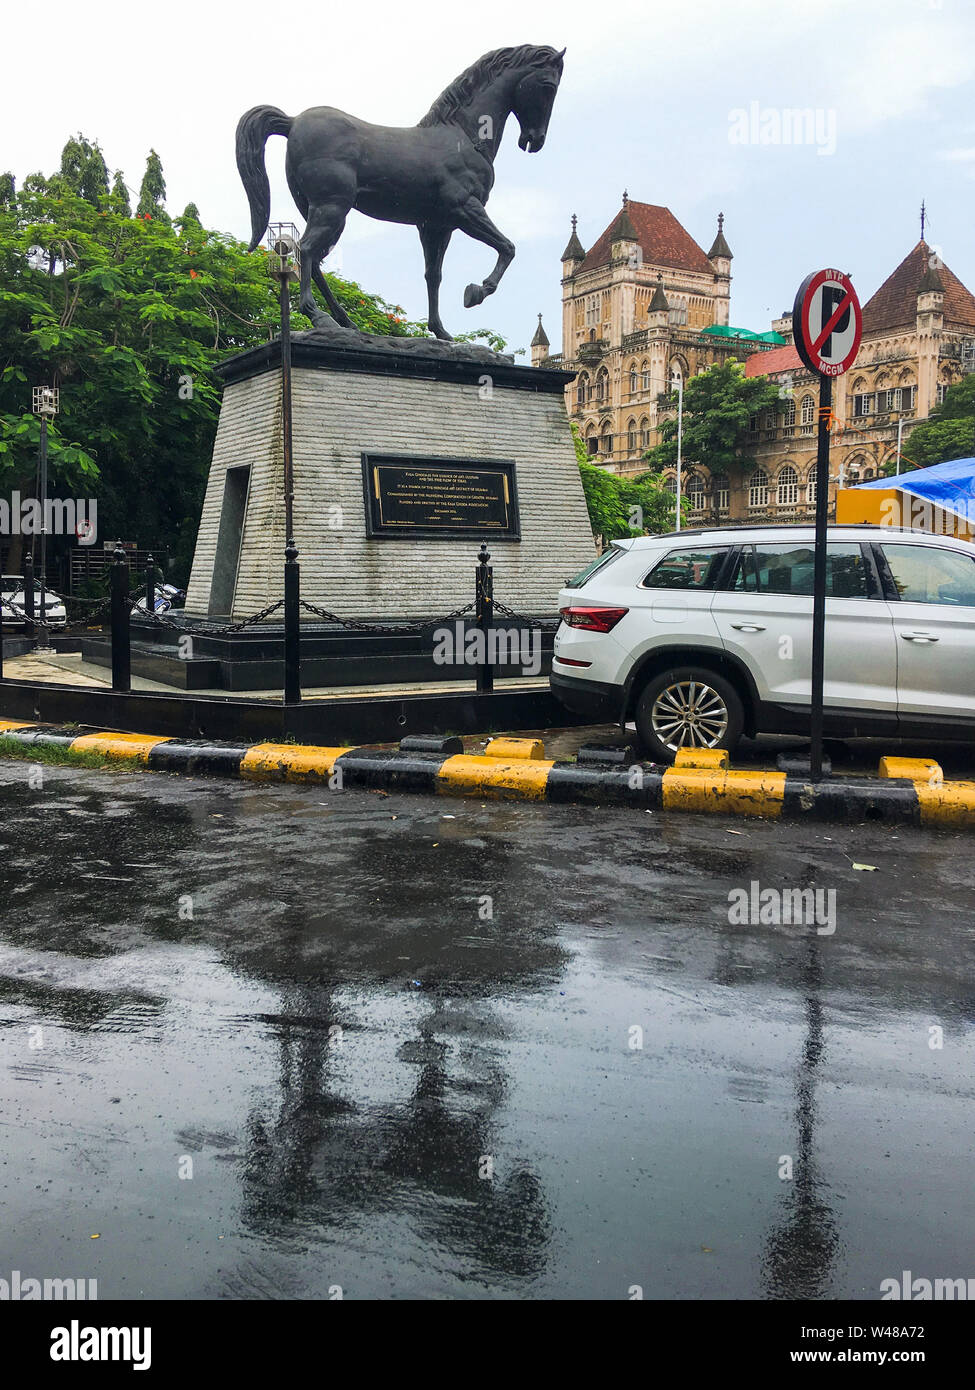 20 Jul 2019 Black horse statue kala ghoda fort, mumbai, maharashtra, India, Asia Stock Photo